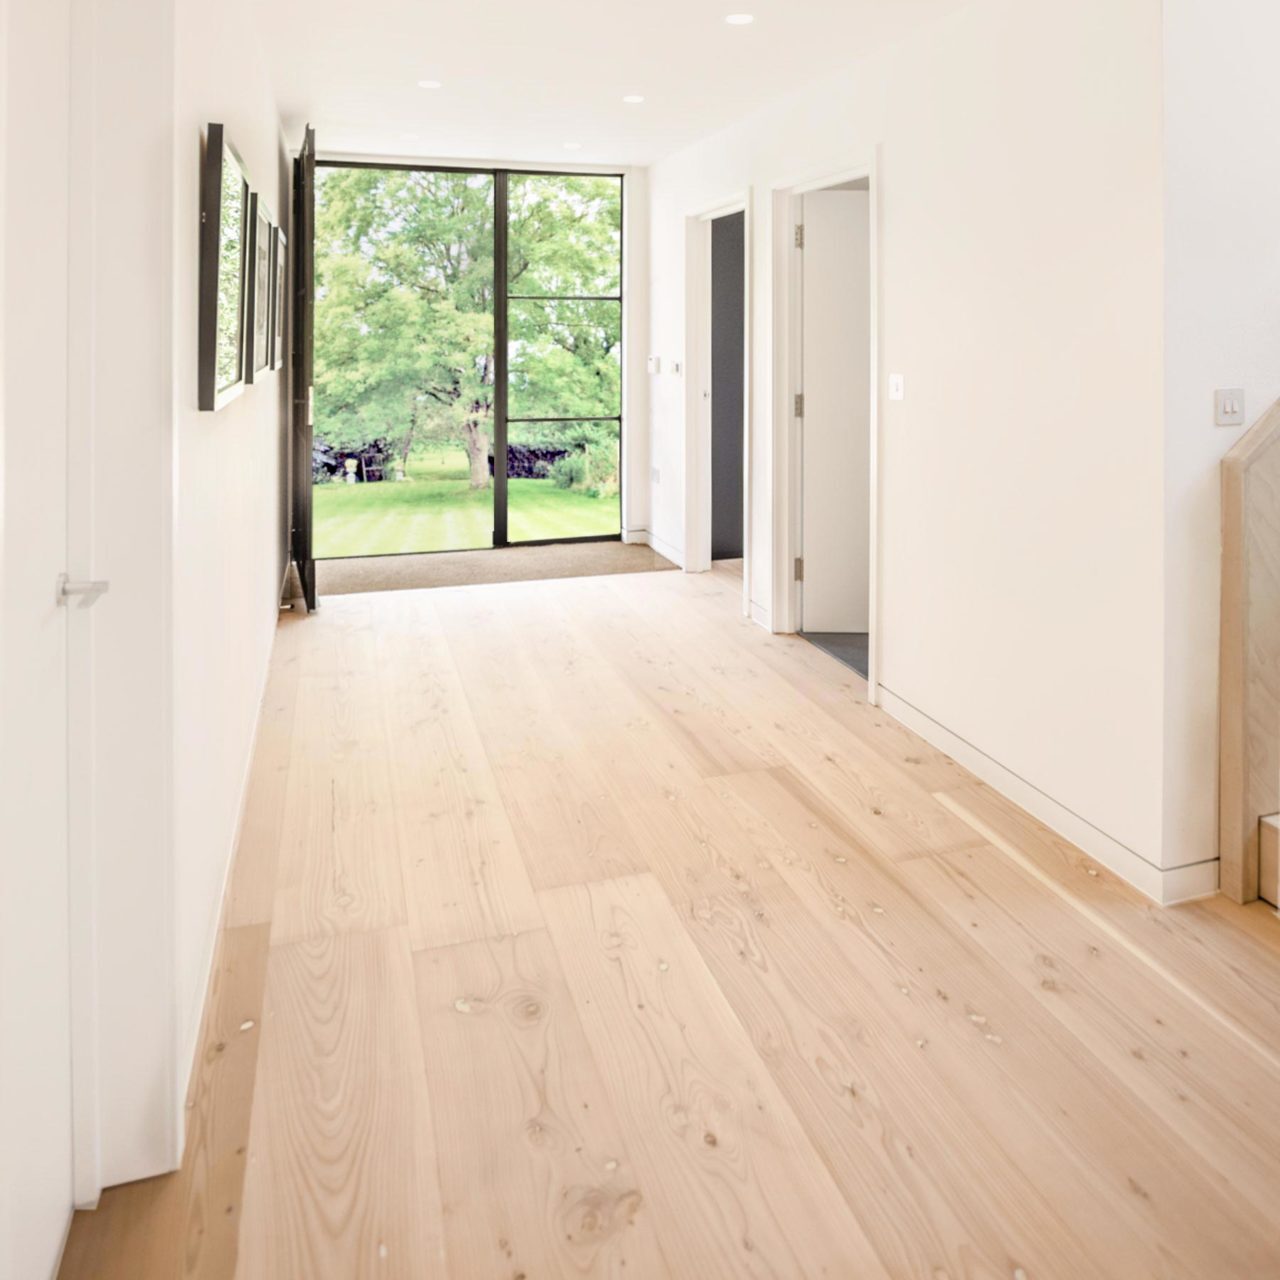 douglas fir flooring in hallway